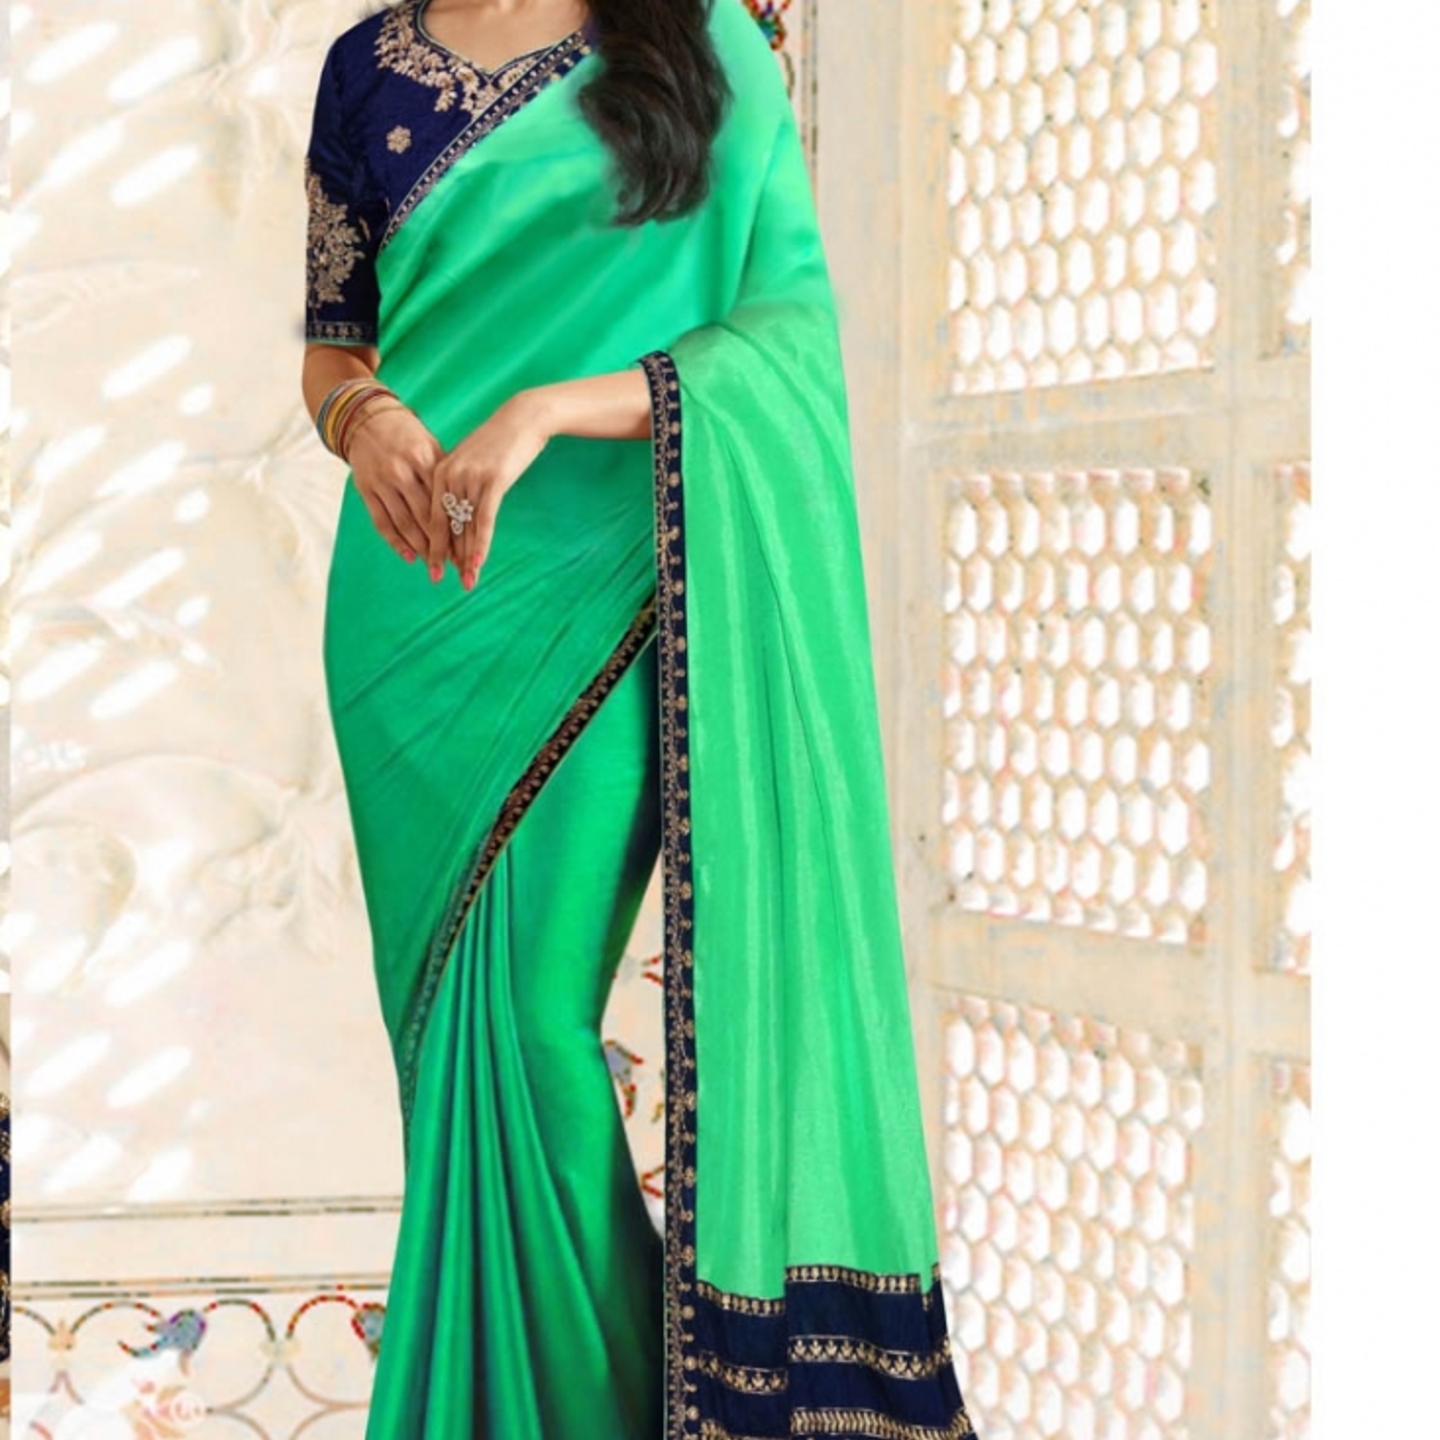 Robe Riche Green Color Malai Silk Embroidery With Lace Saree 